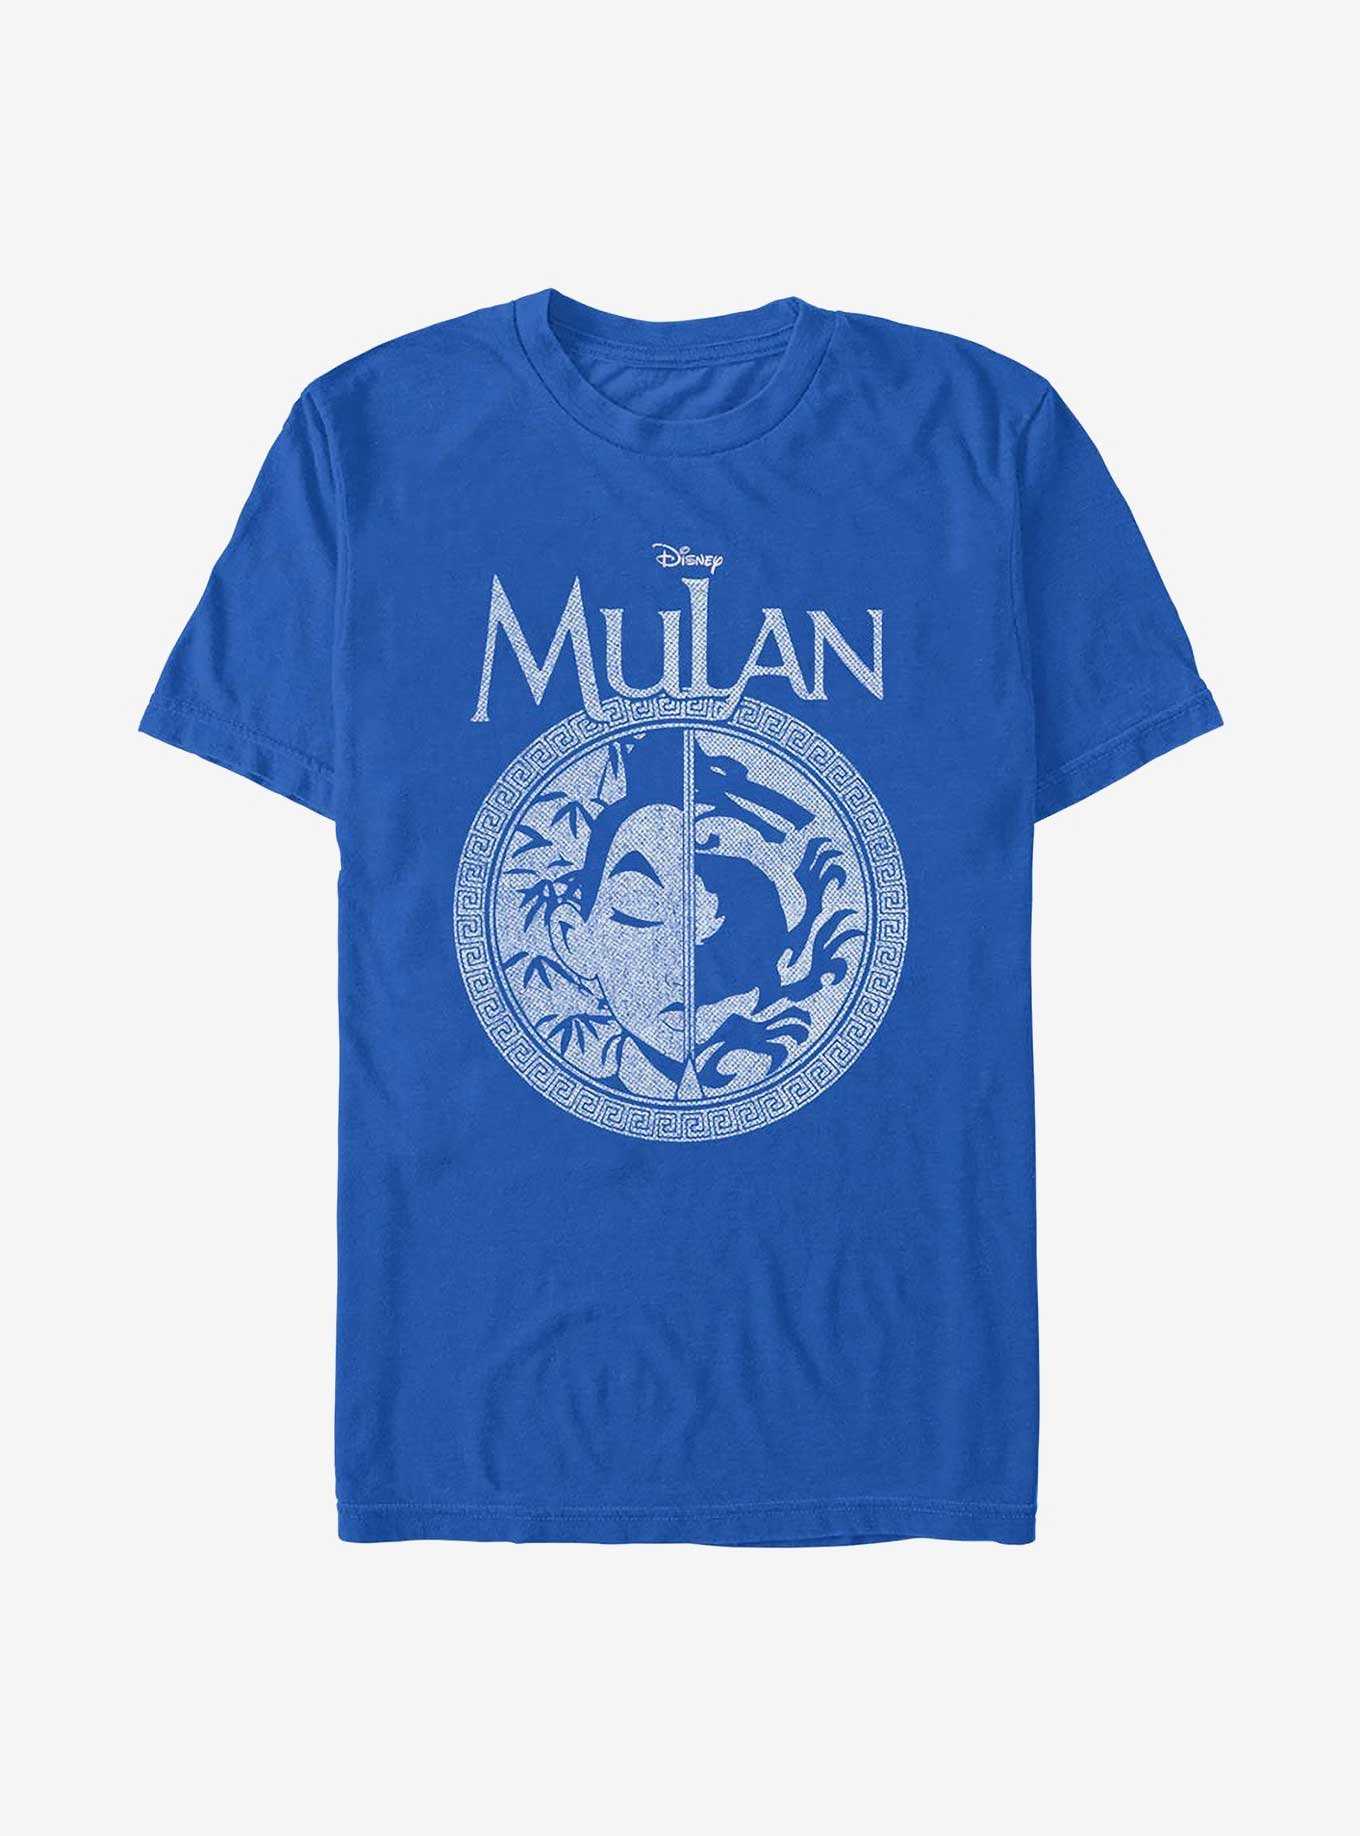 Disney Mulan Dynasty Divided T-Shirt, , hi-res